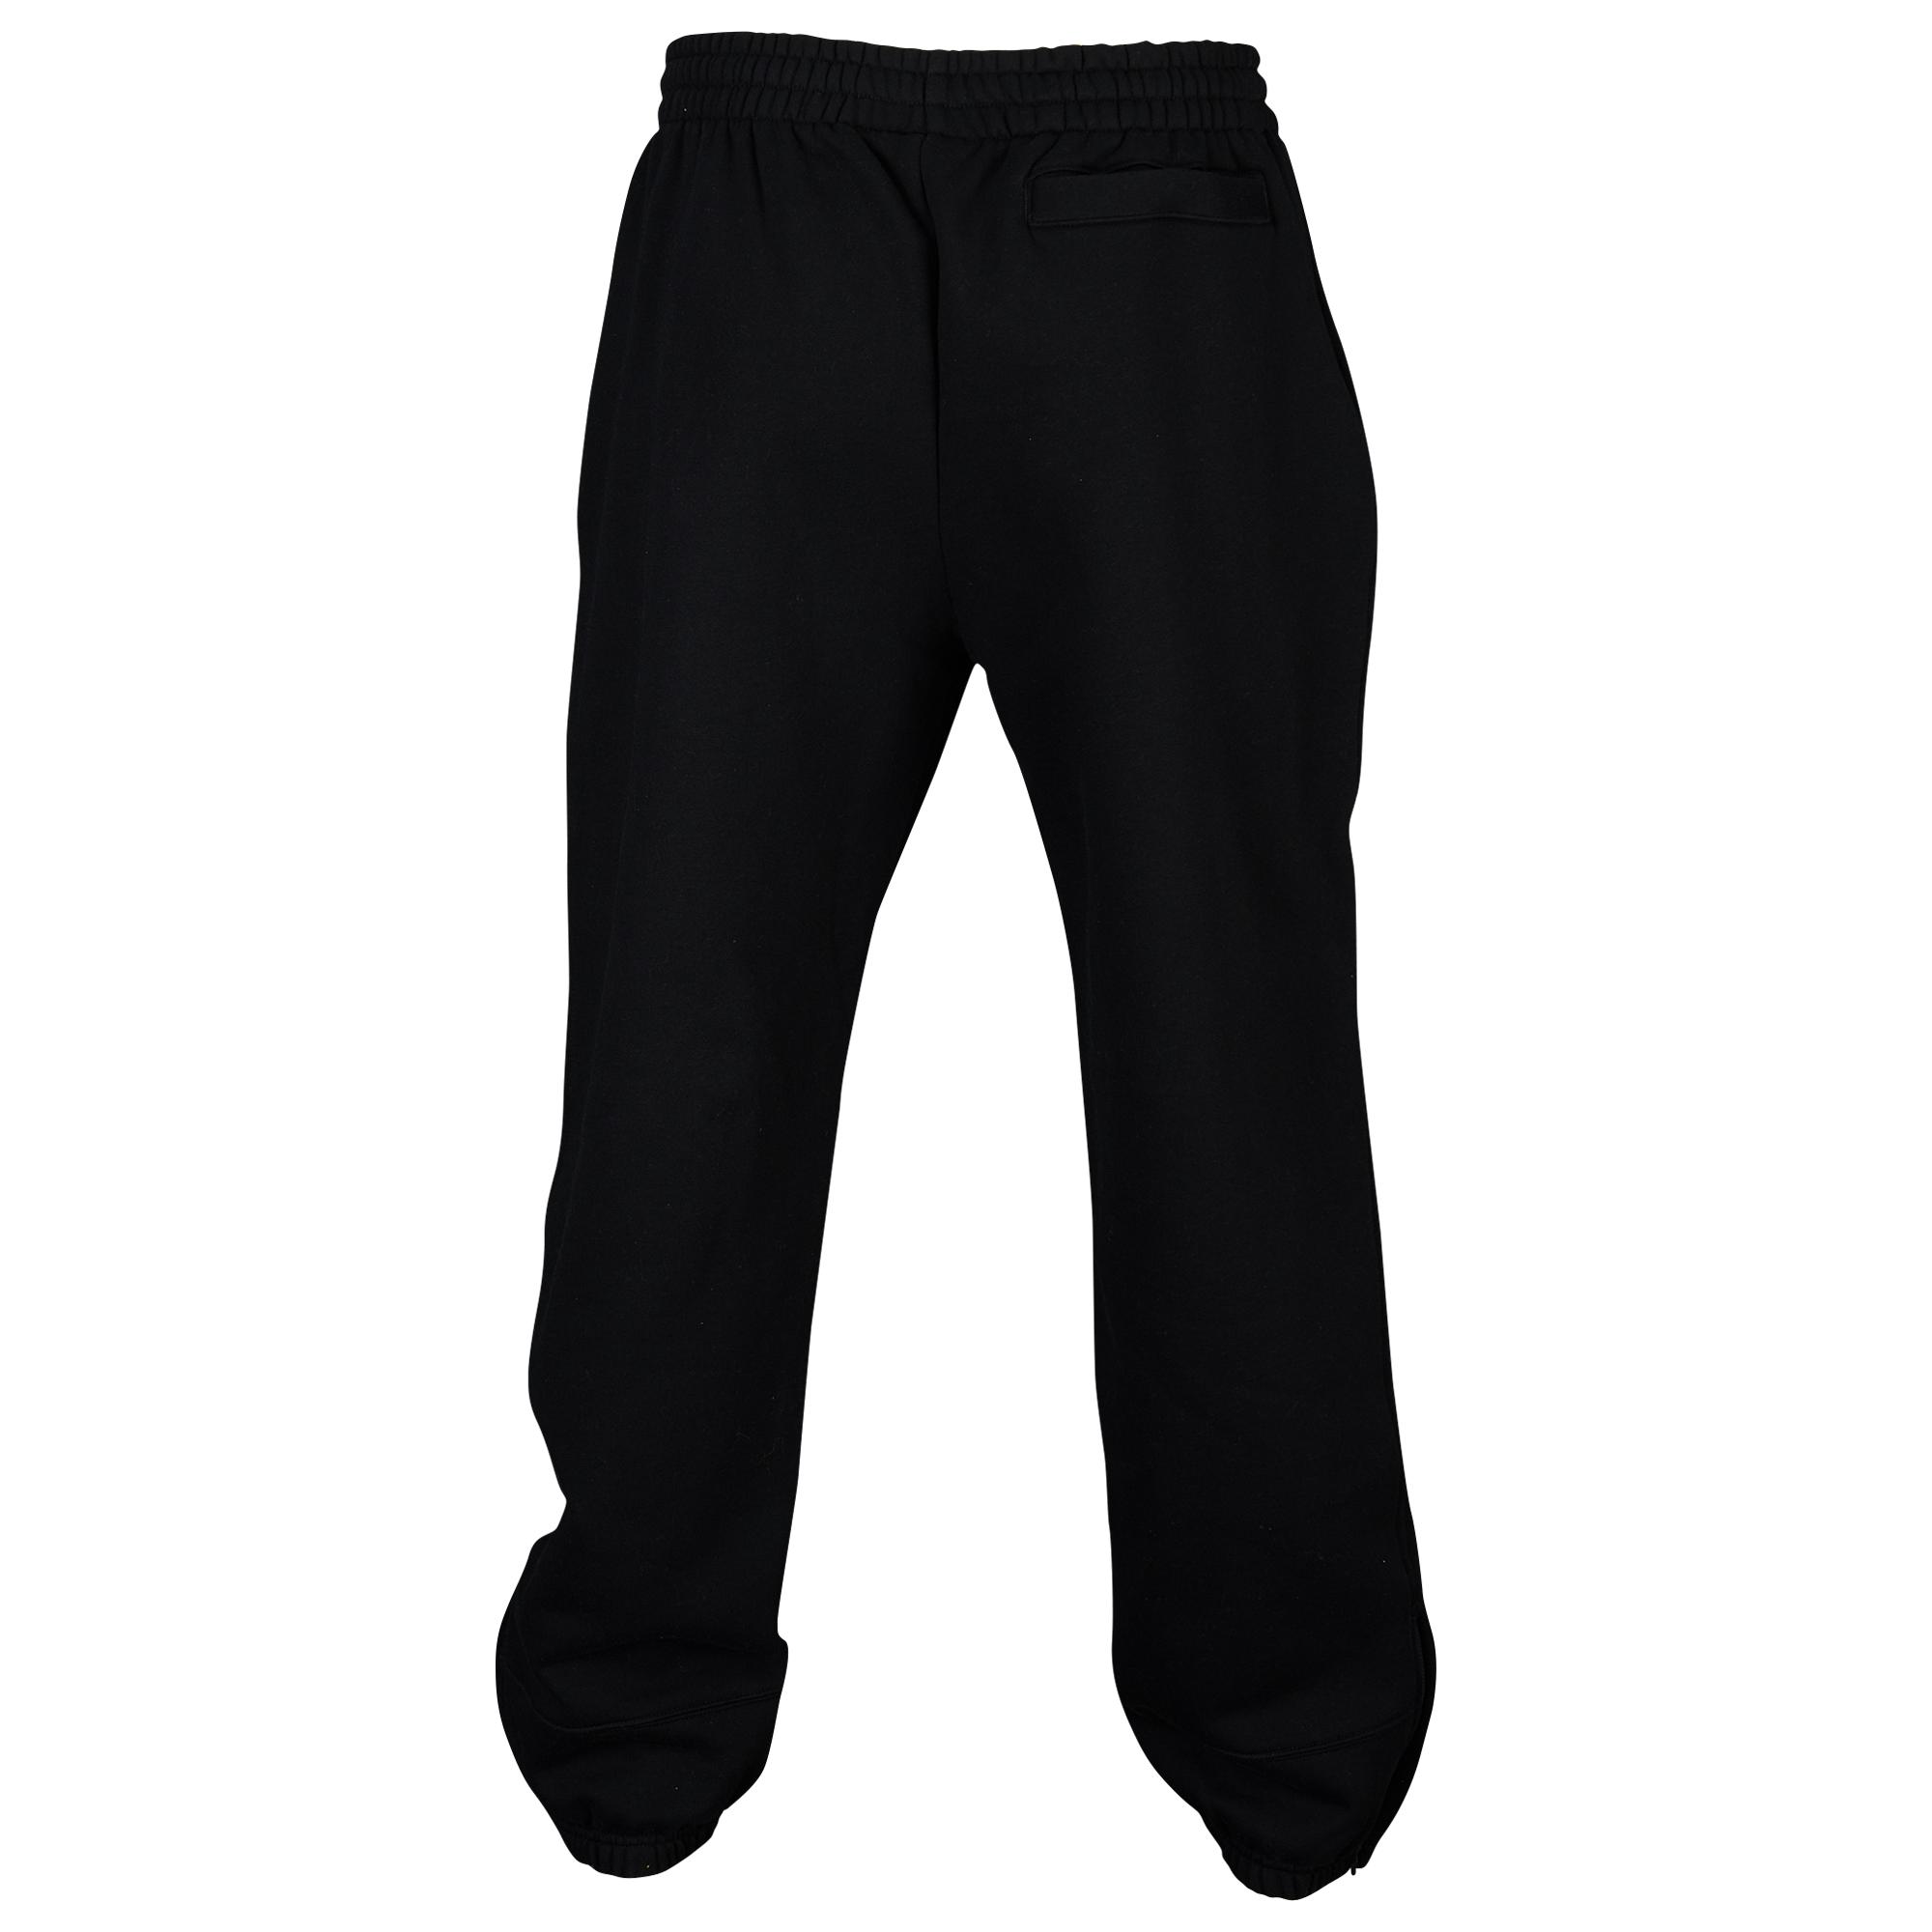 Champion Timberland Super Fleece Luxe Pants in Black for Men - Lyst